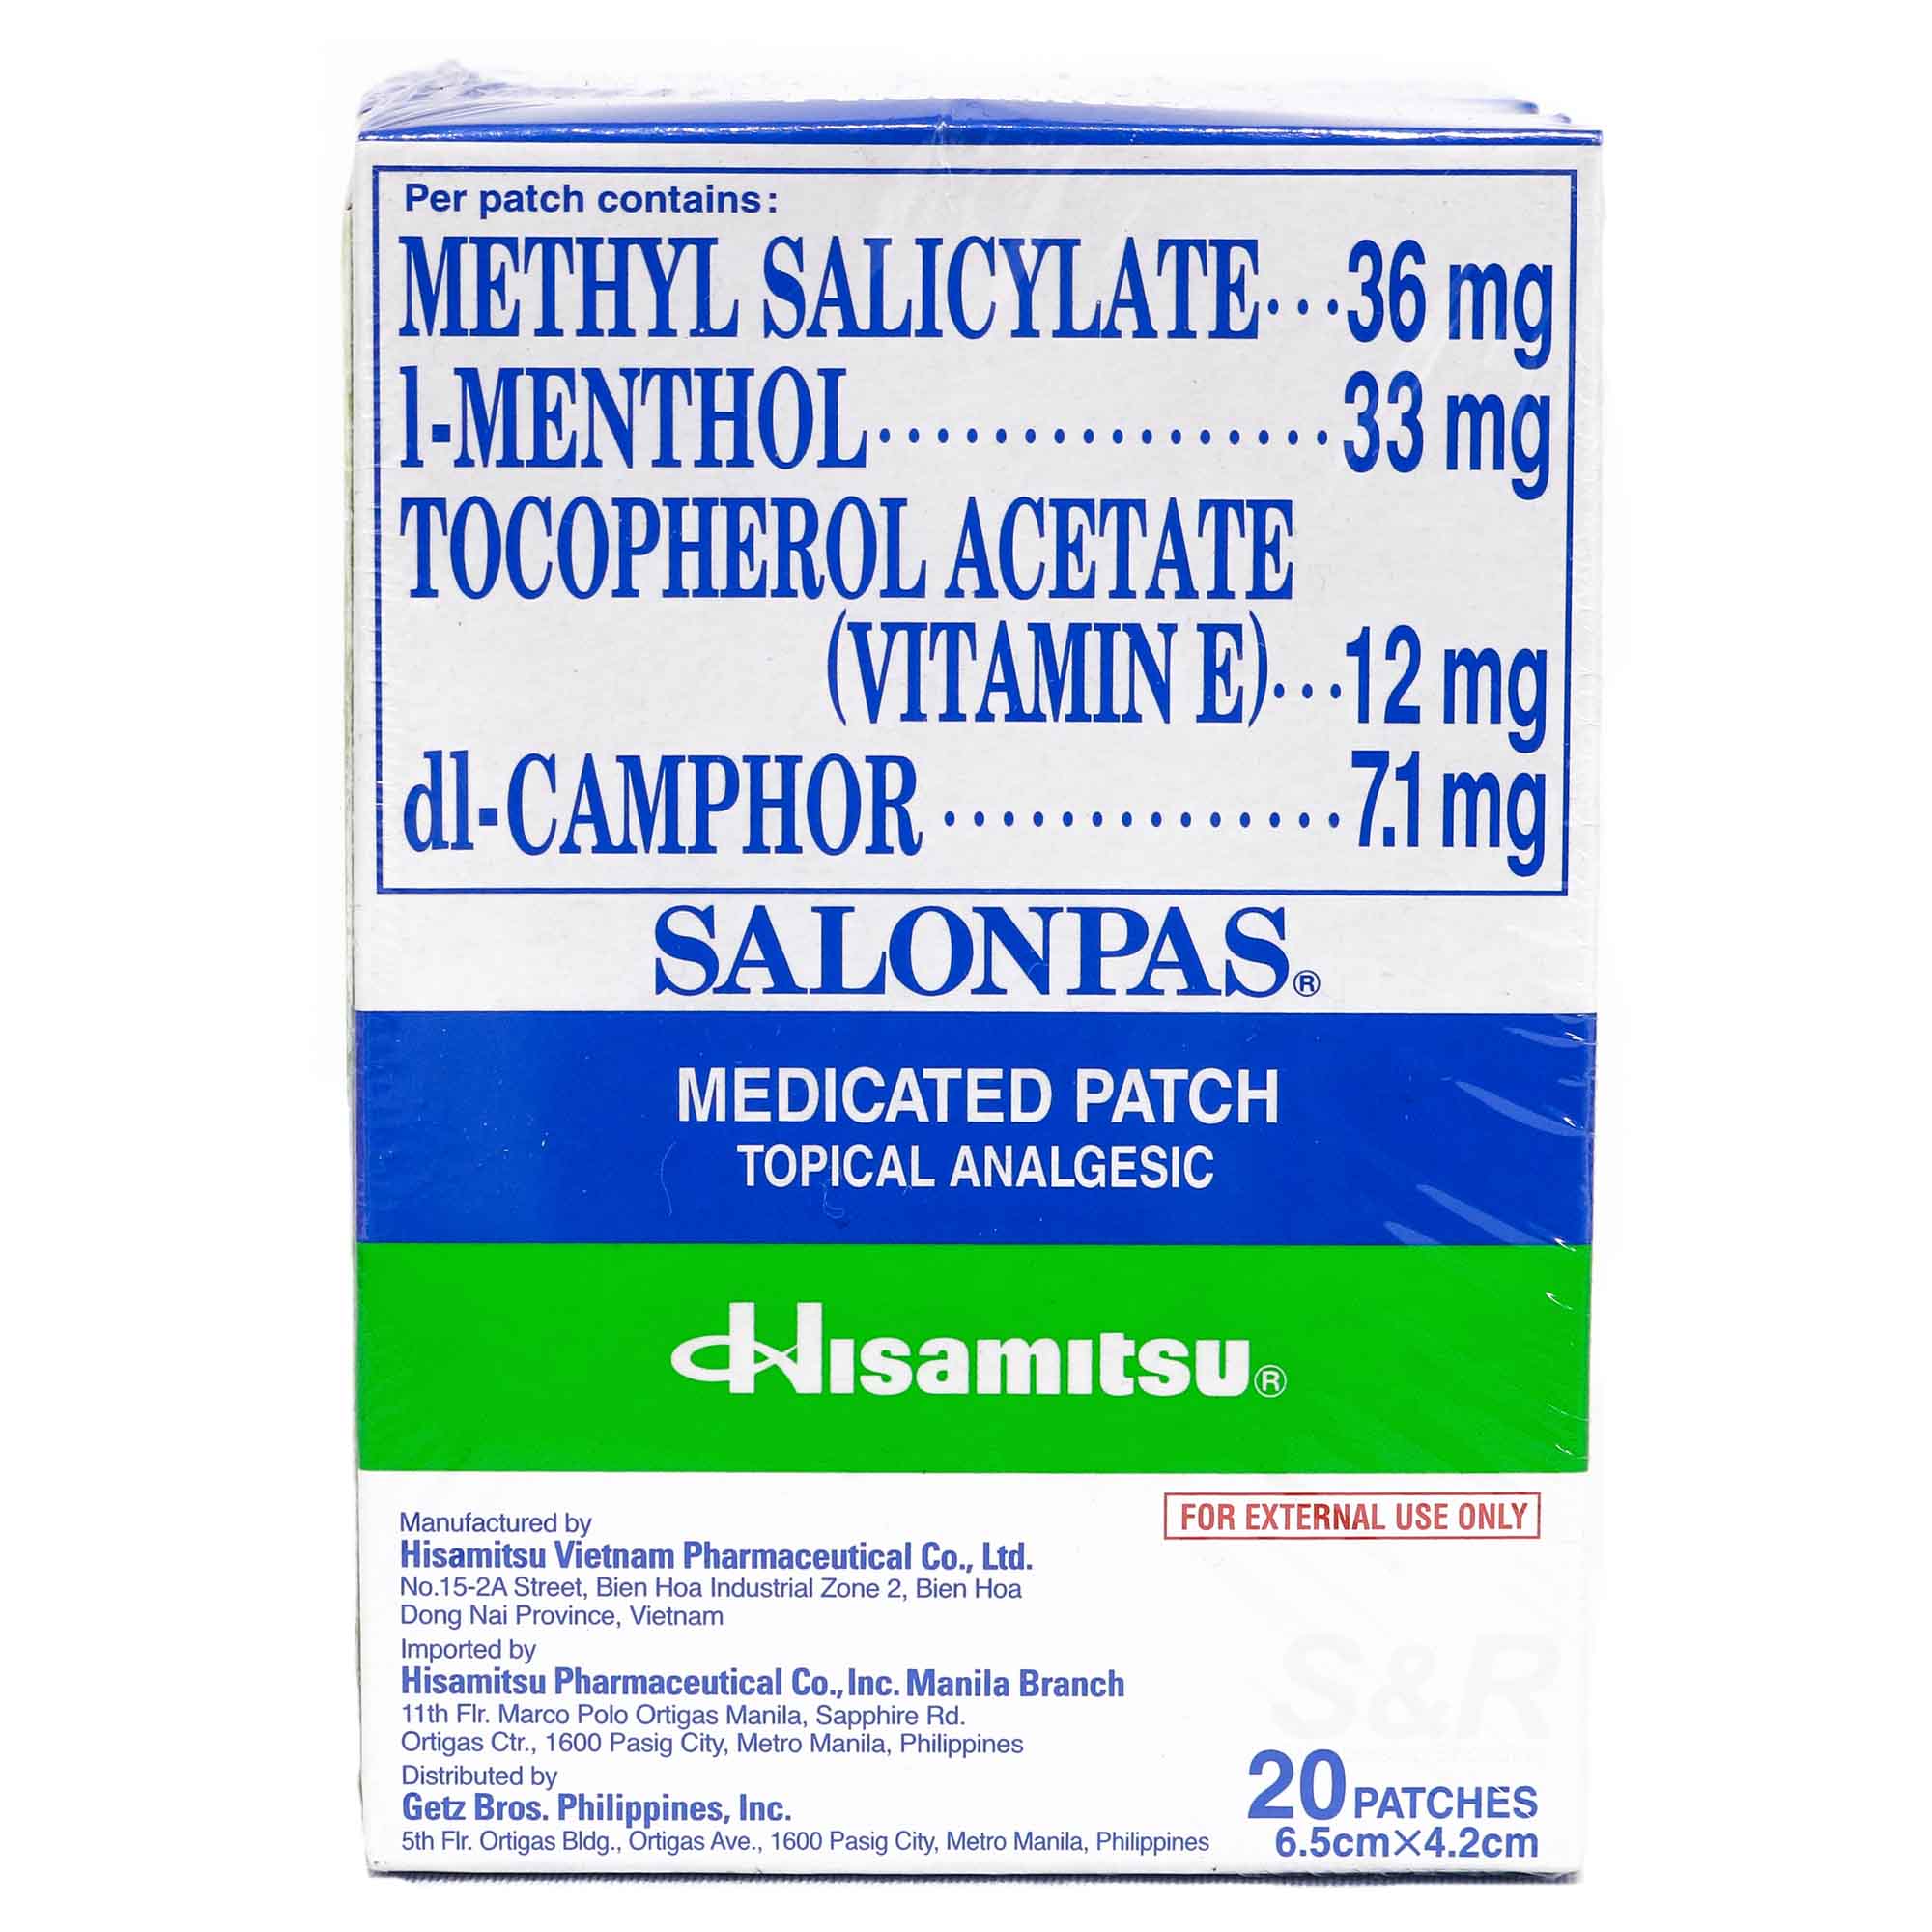 Hisamitsu Salonpas Medicated Patch 5 packs